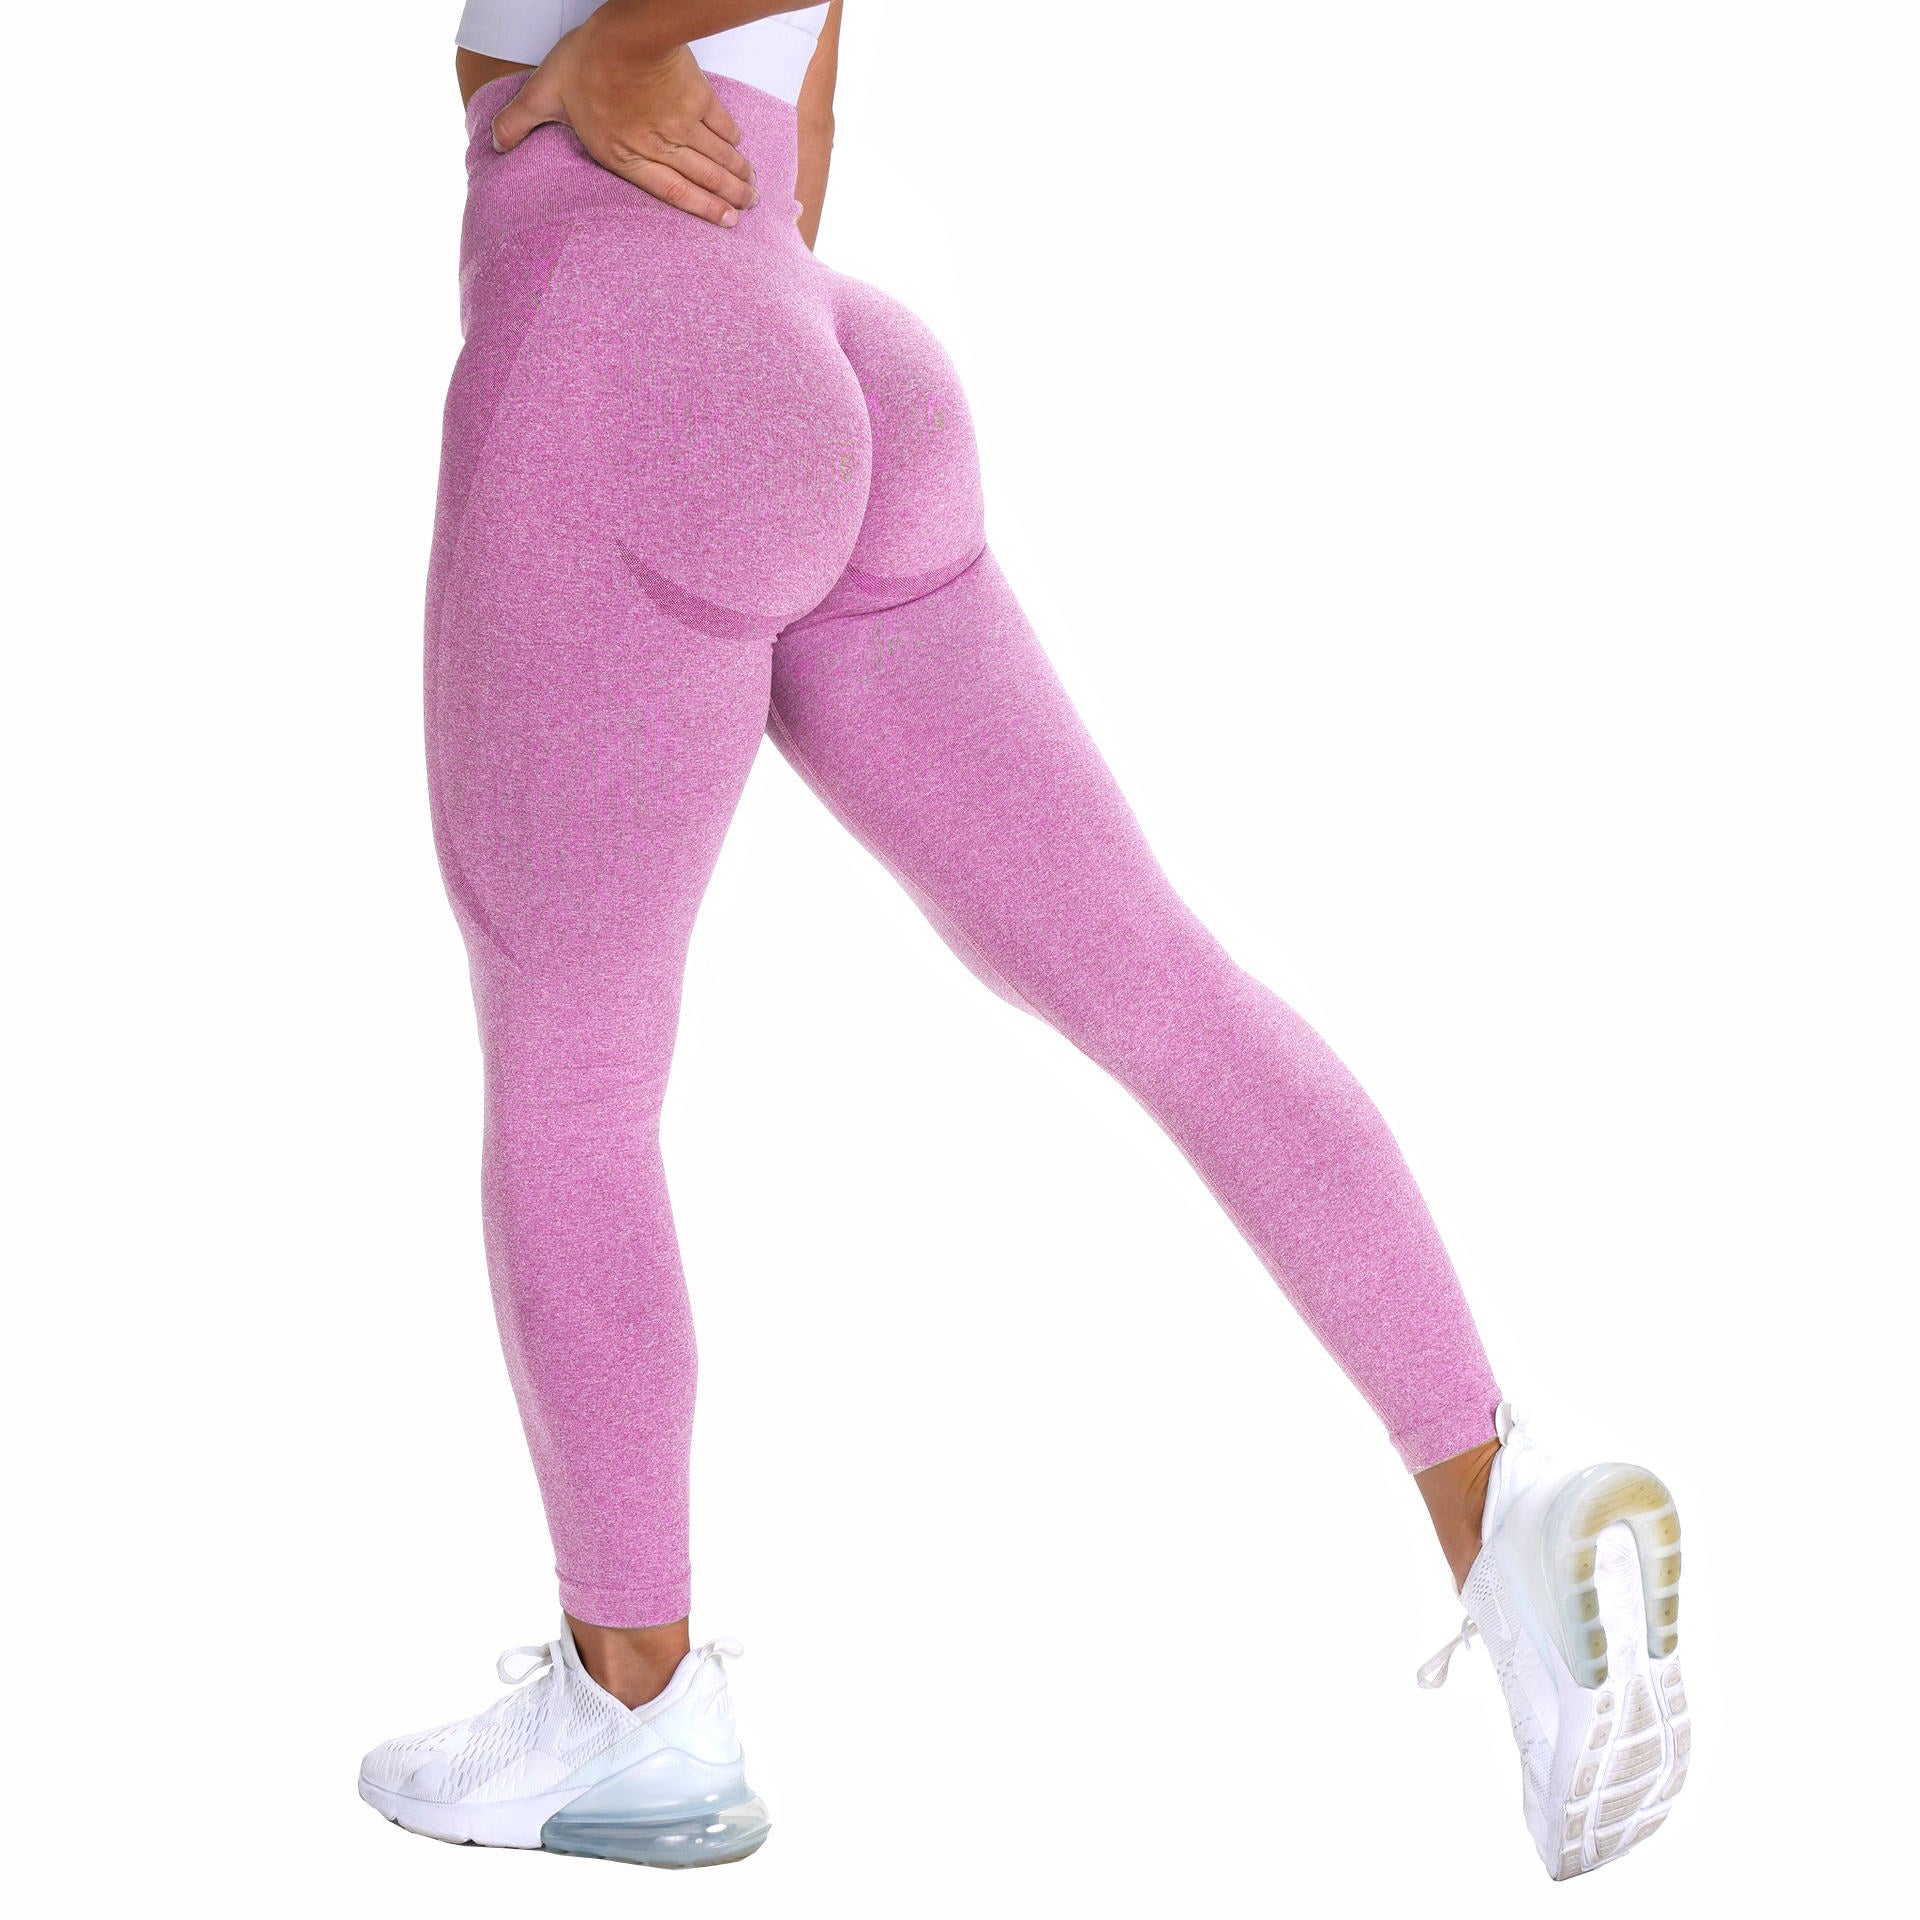 Buy High Waisted Leggings for Women - Soft Athletic Tummy